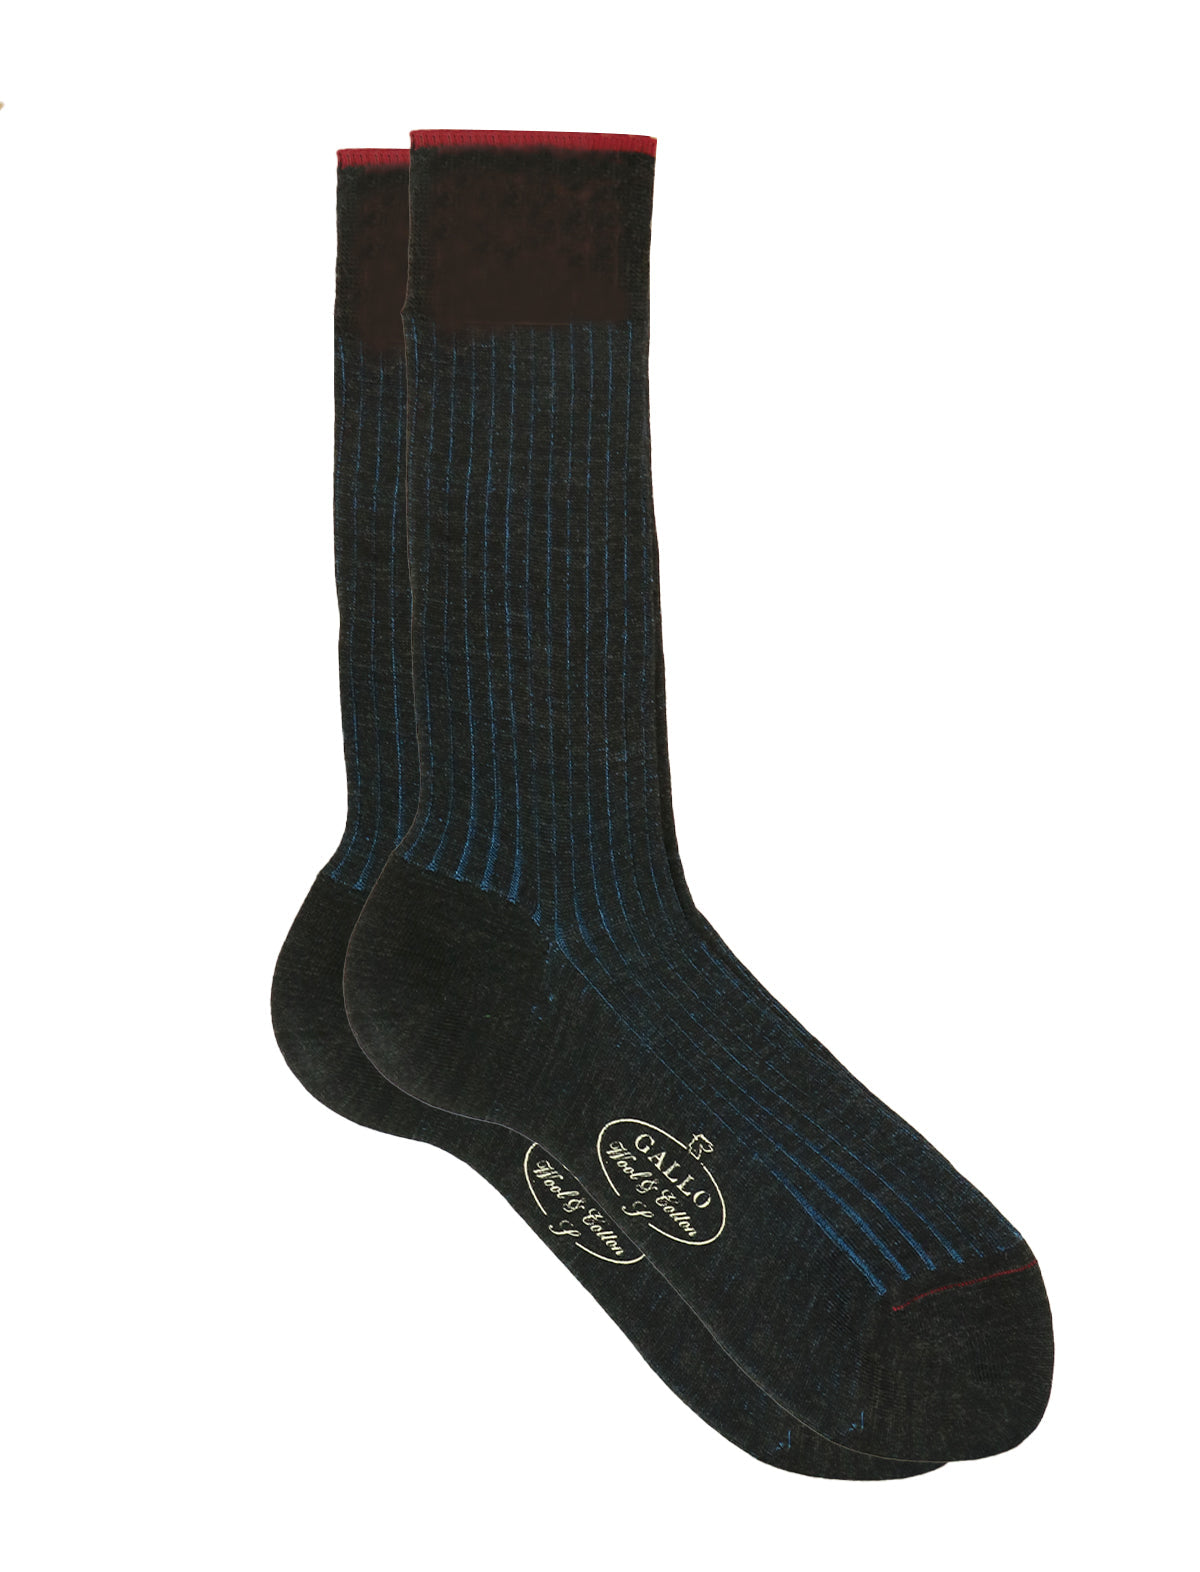 Gallo Socks in Black w/ Blue & Red Pinstripes